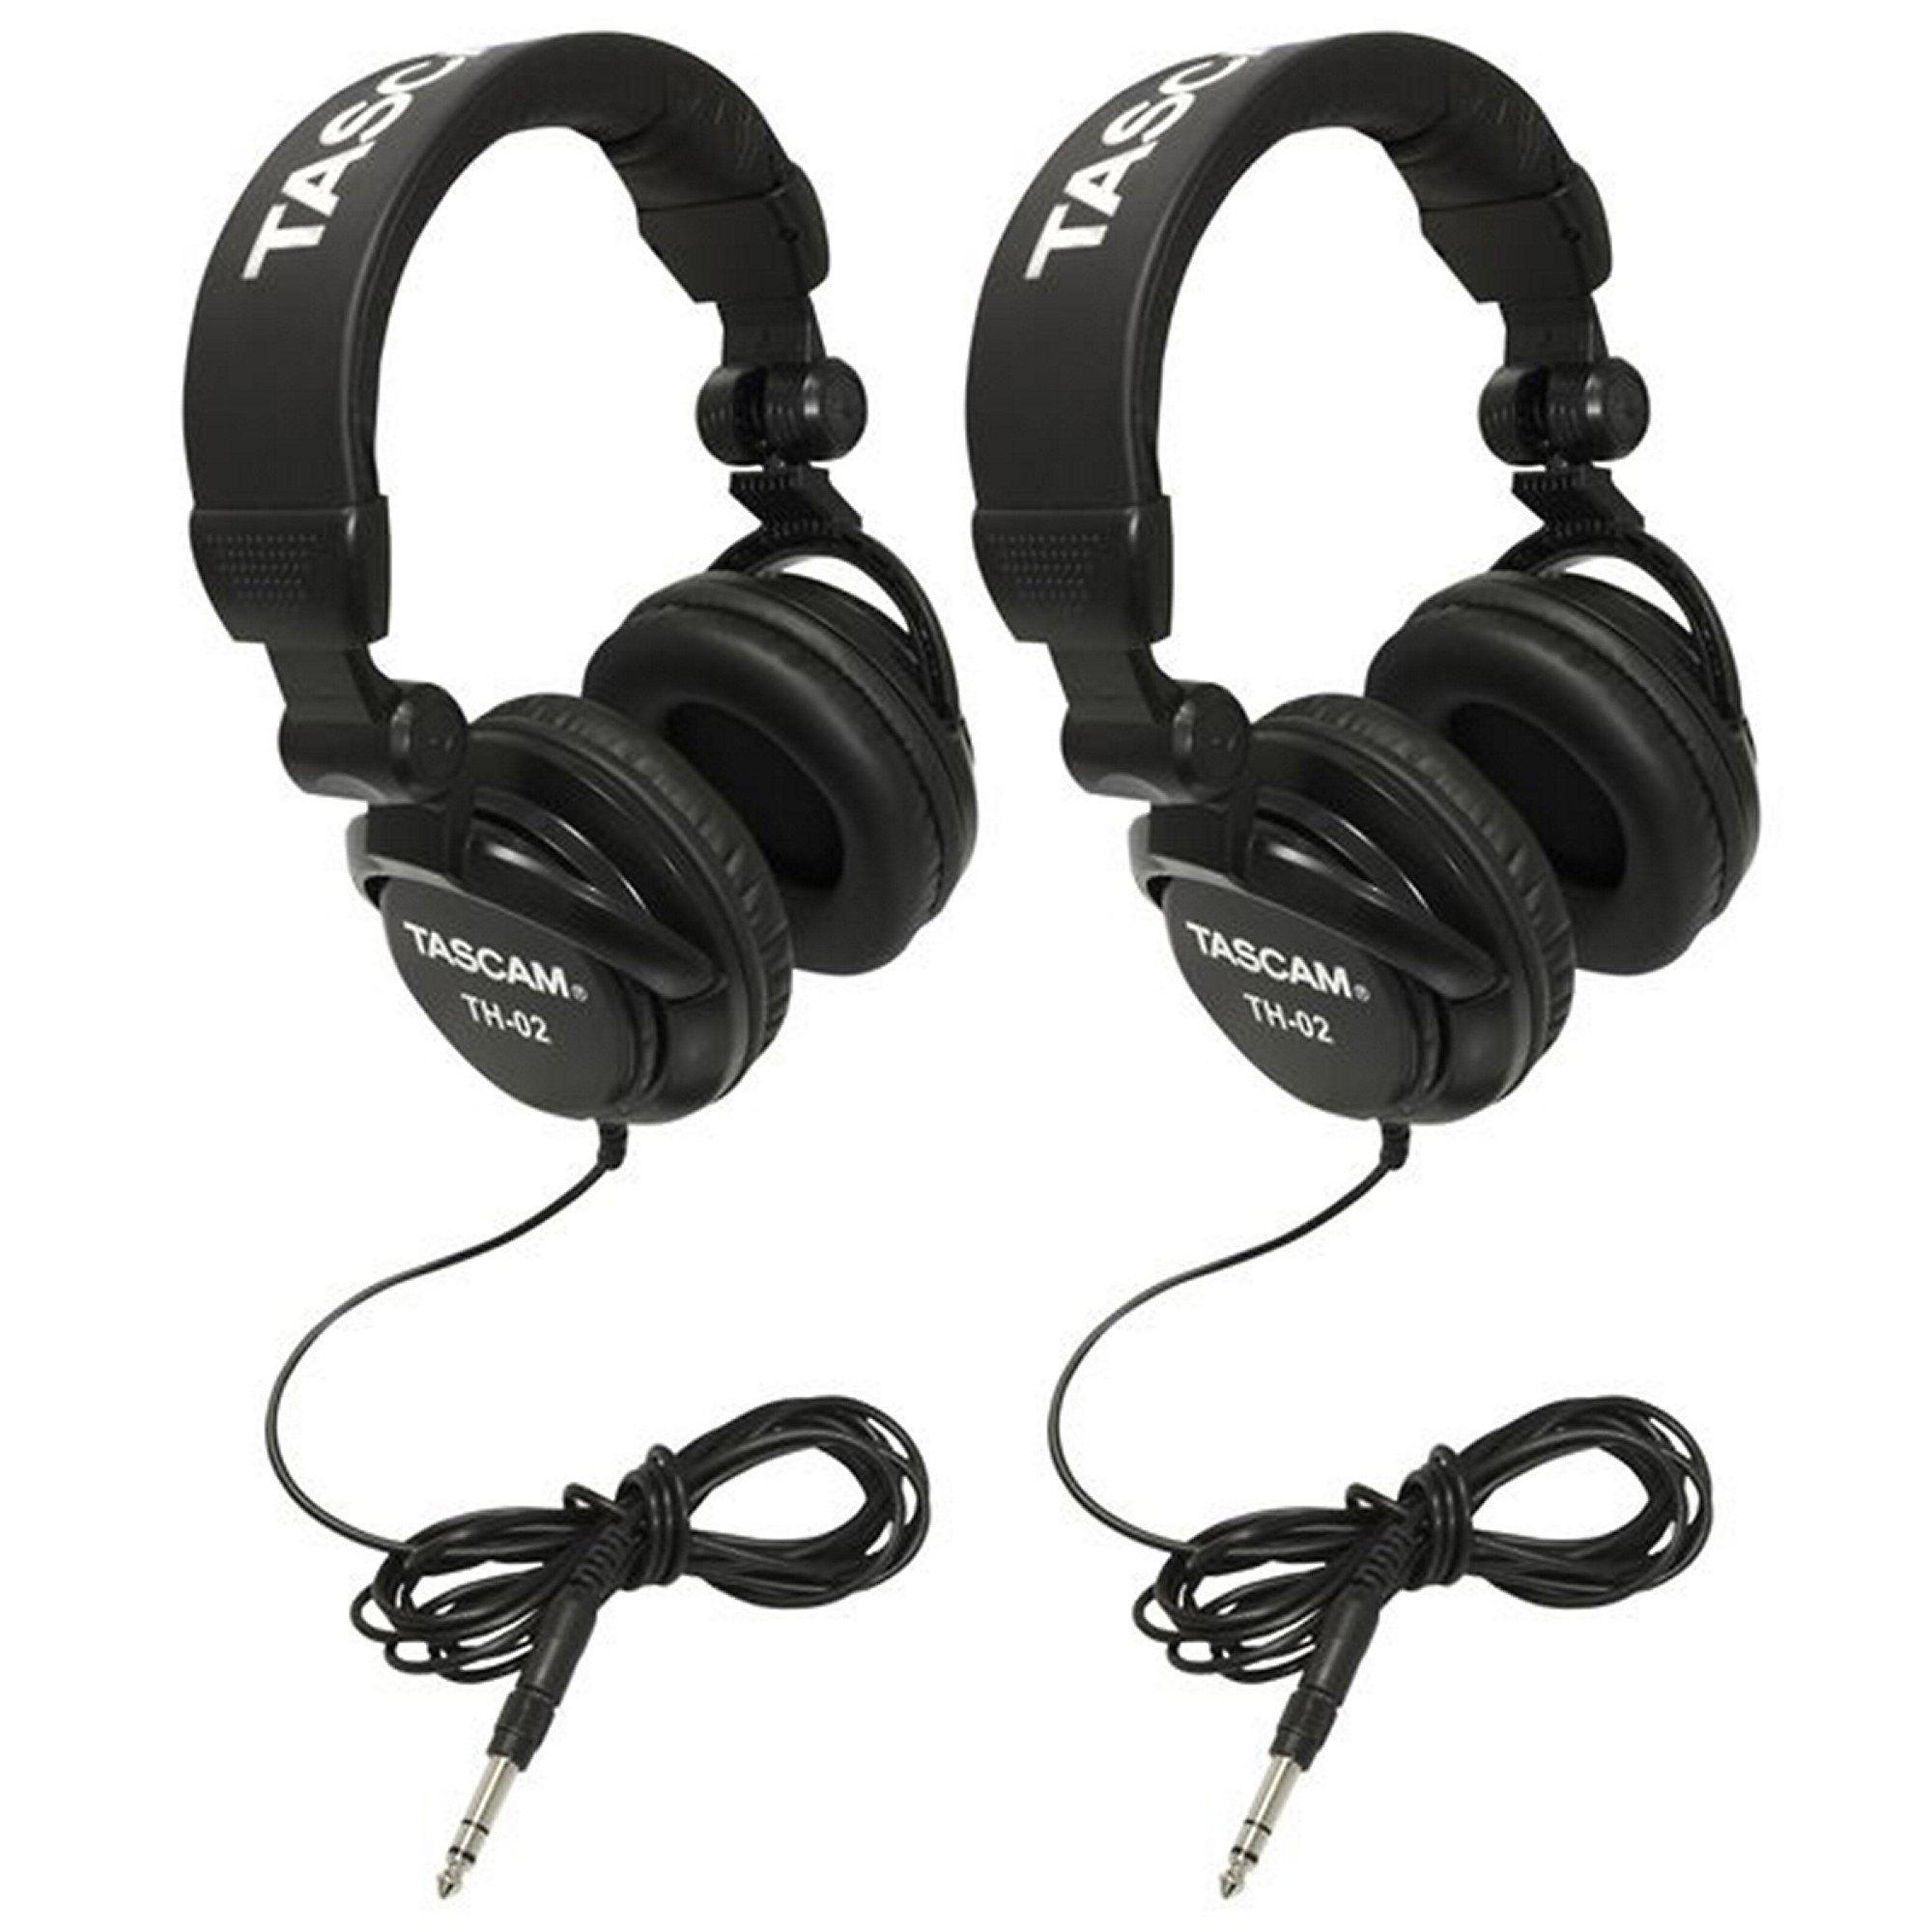 2-Pack Tascam TH-02 Recording Studio Headphones (Black) $29.99 + Free Shipping via Guitar Center